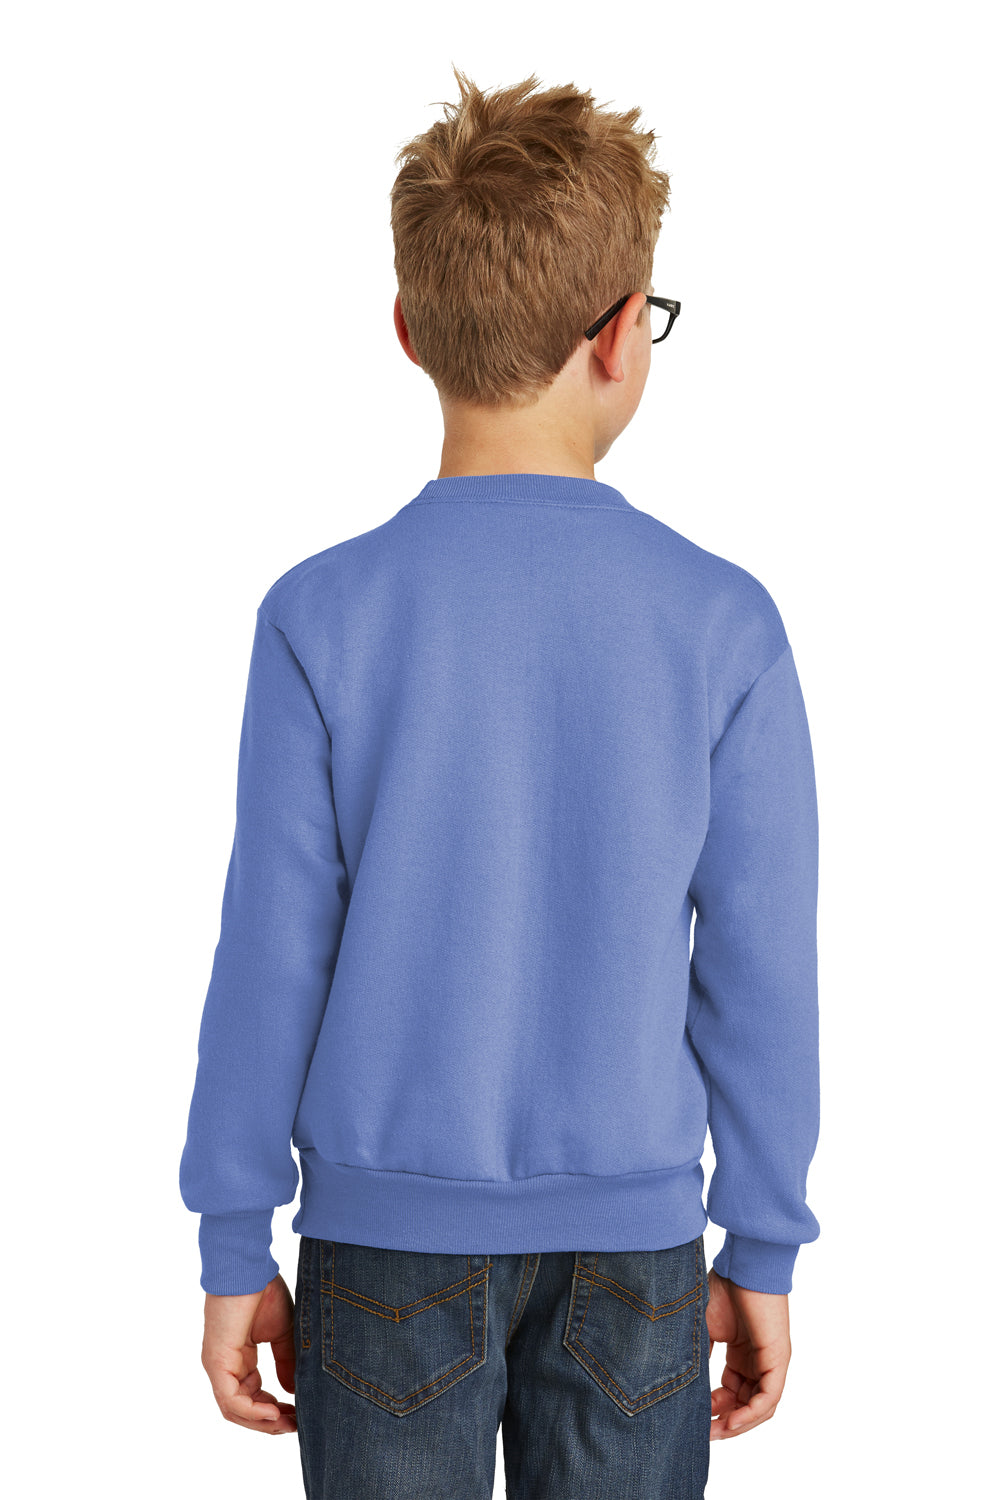 Port & Company PC90Y Youth Core Fleece Crewneck Sweatshirt Carolina Blue Back